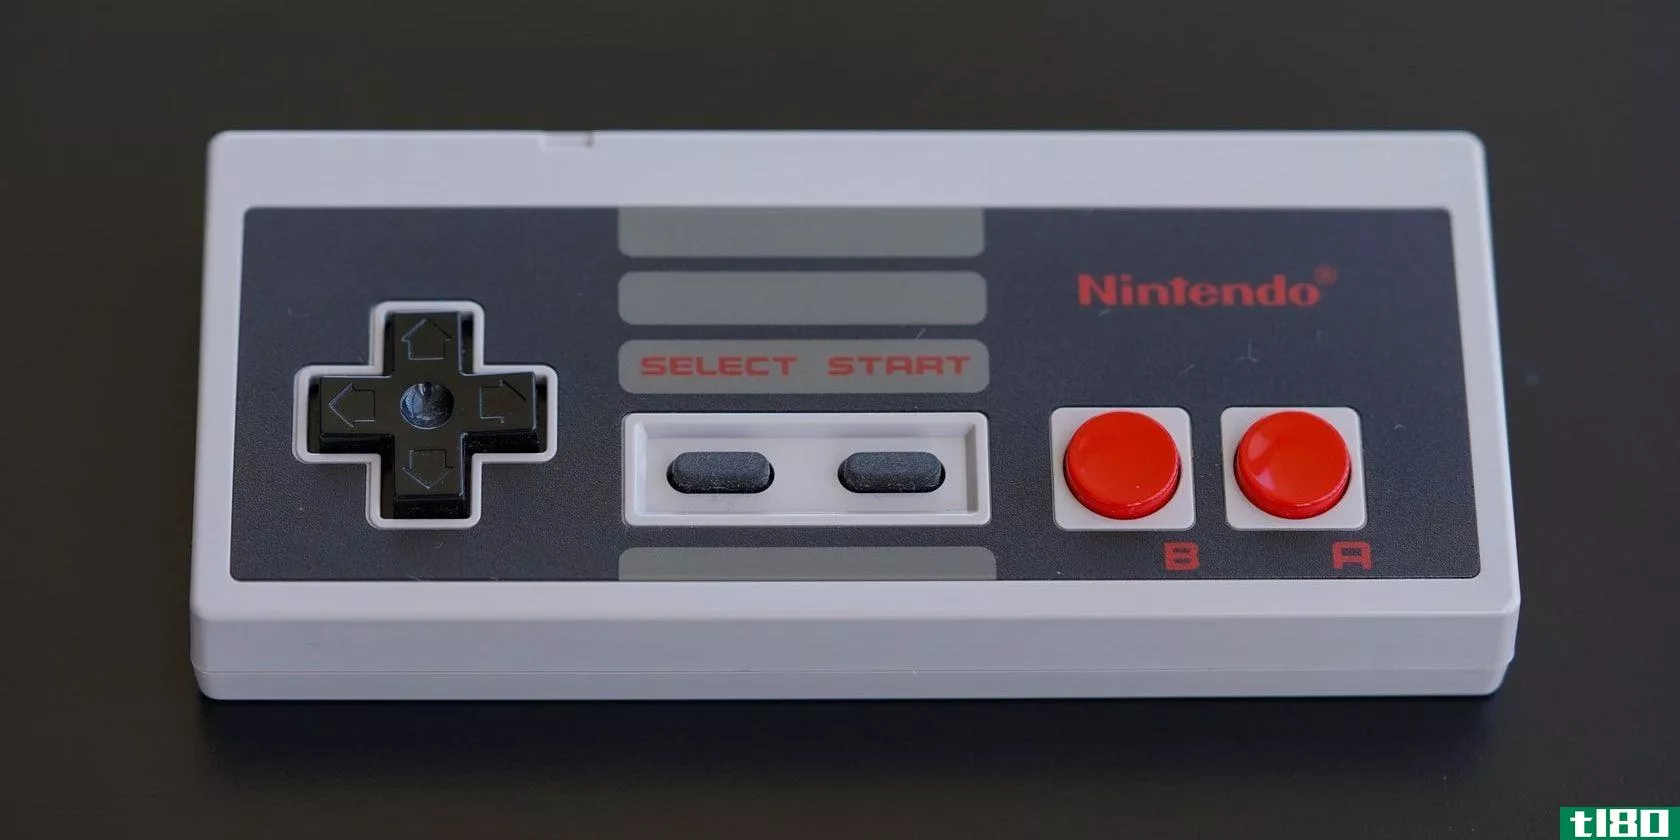 Photograph of an NES controller